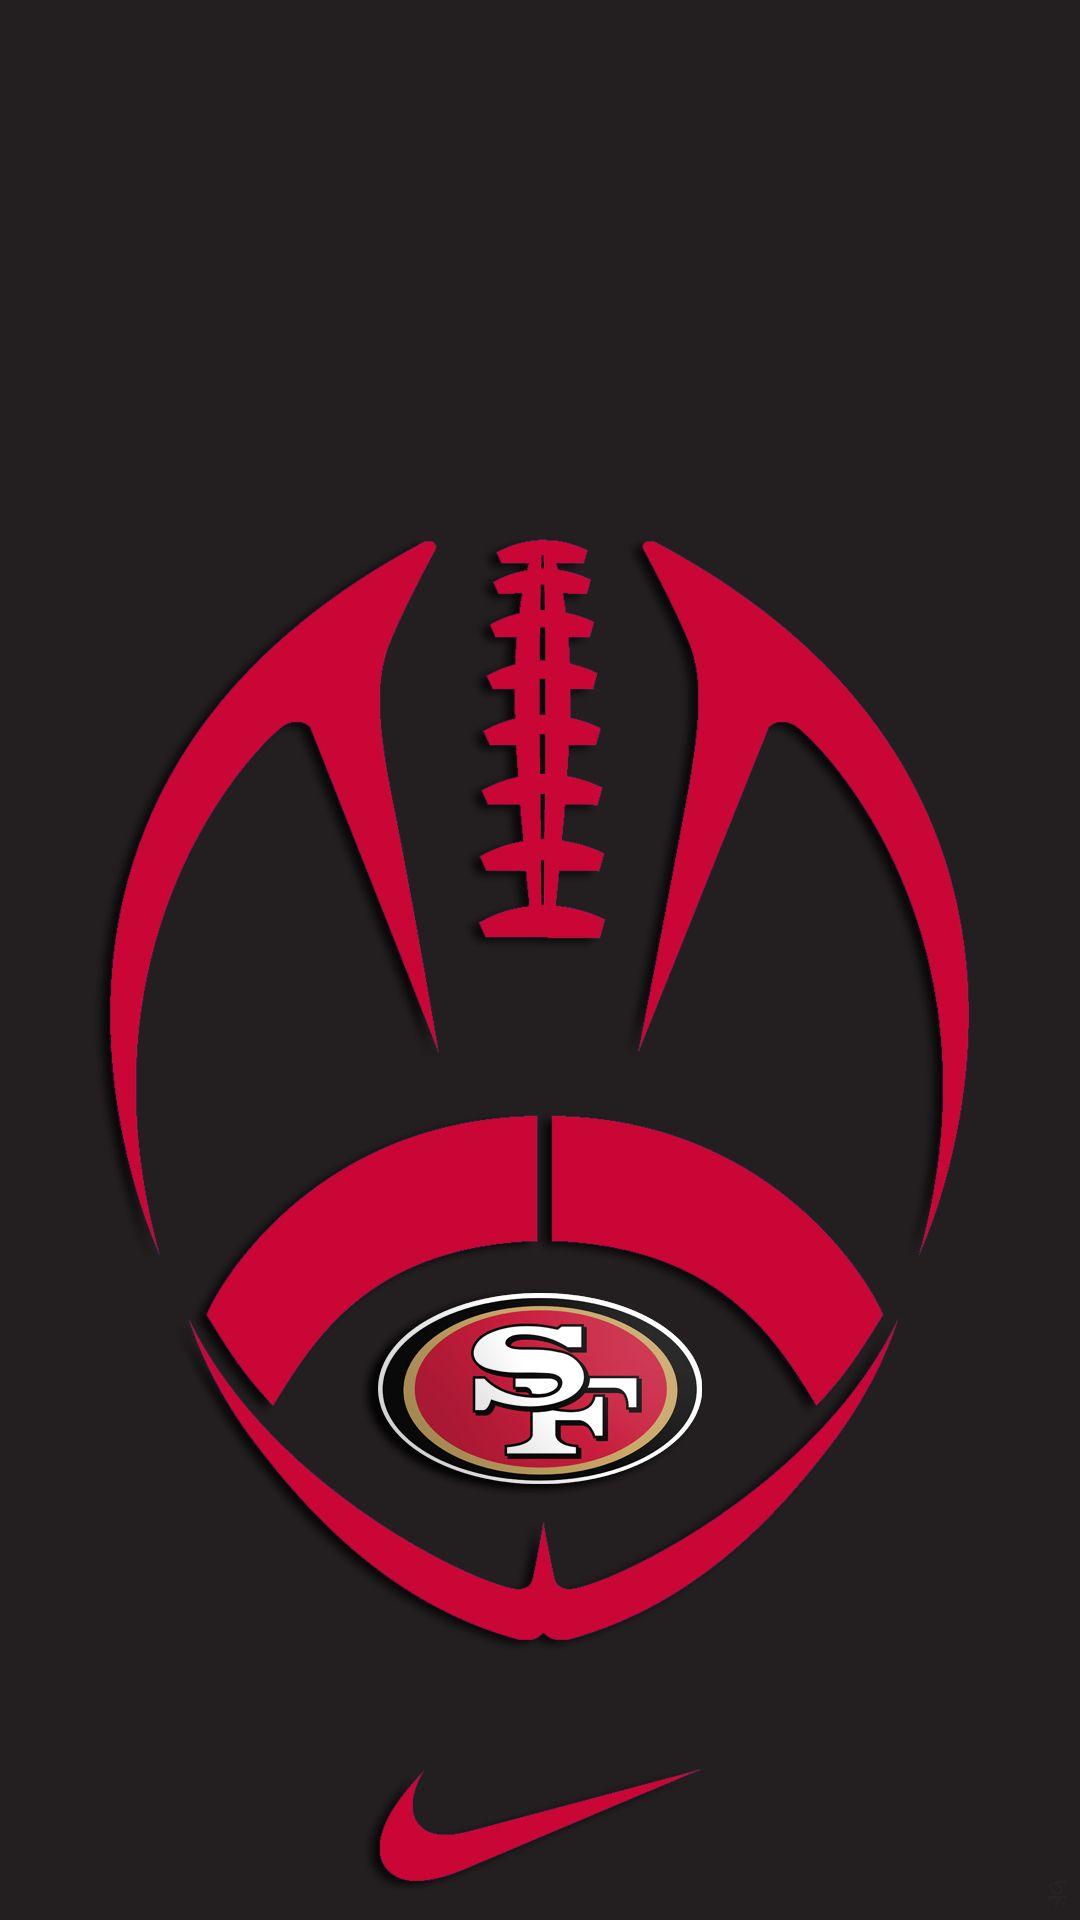 Next year. San francisco 49ers logo, San francisco 49ers, San francisco 49ers football